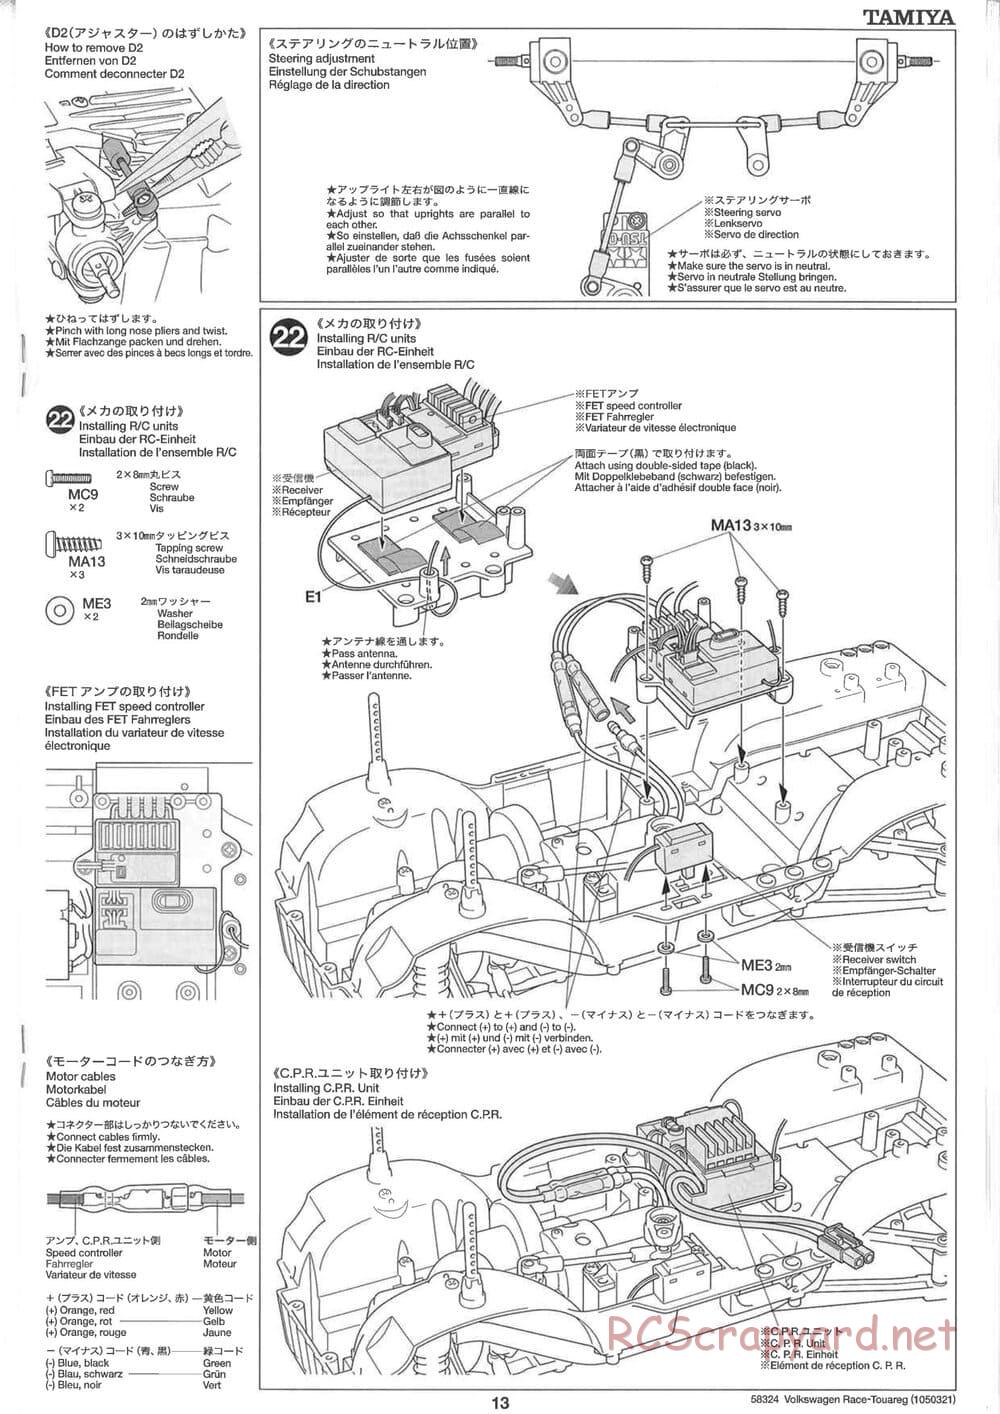 Tamiya - Volkswagen Race-Touareg - CC-01 Chassis - Manual - Page 13